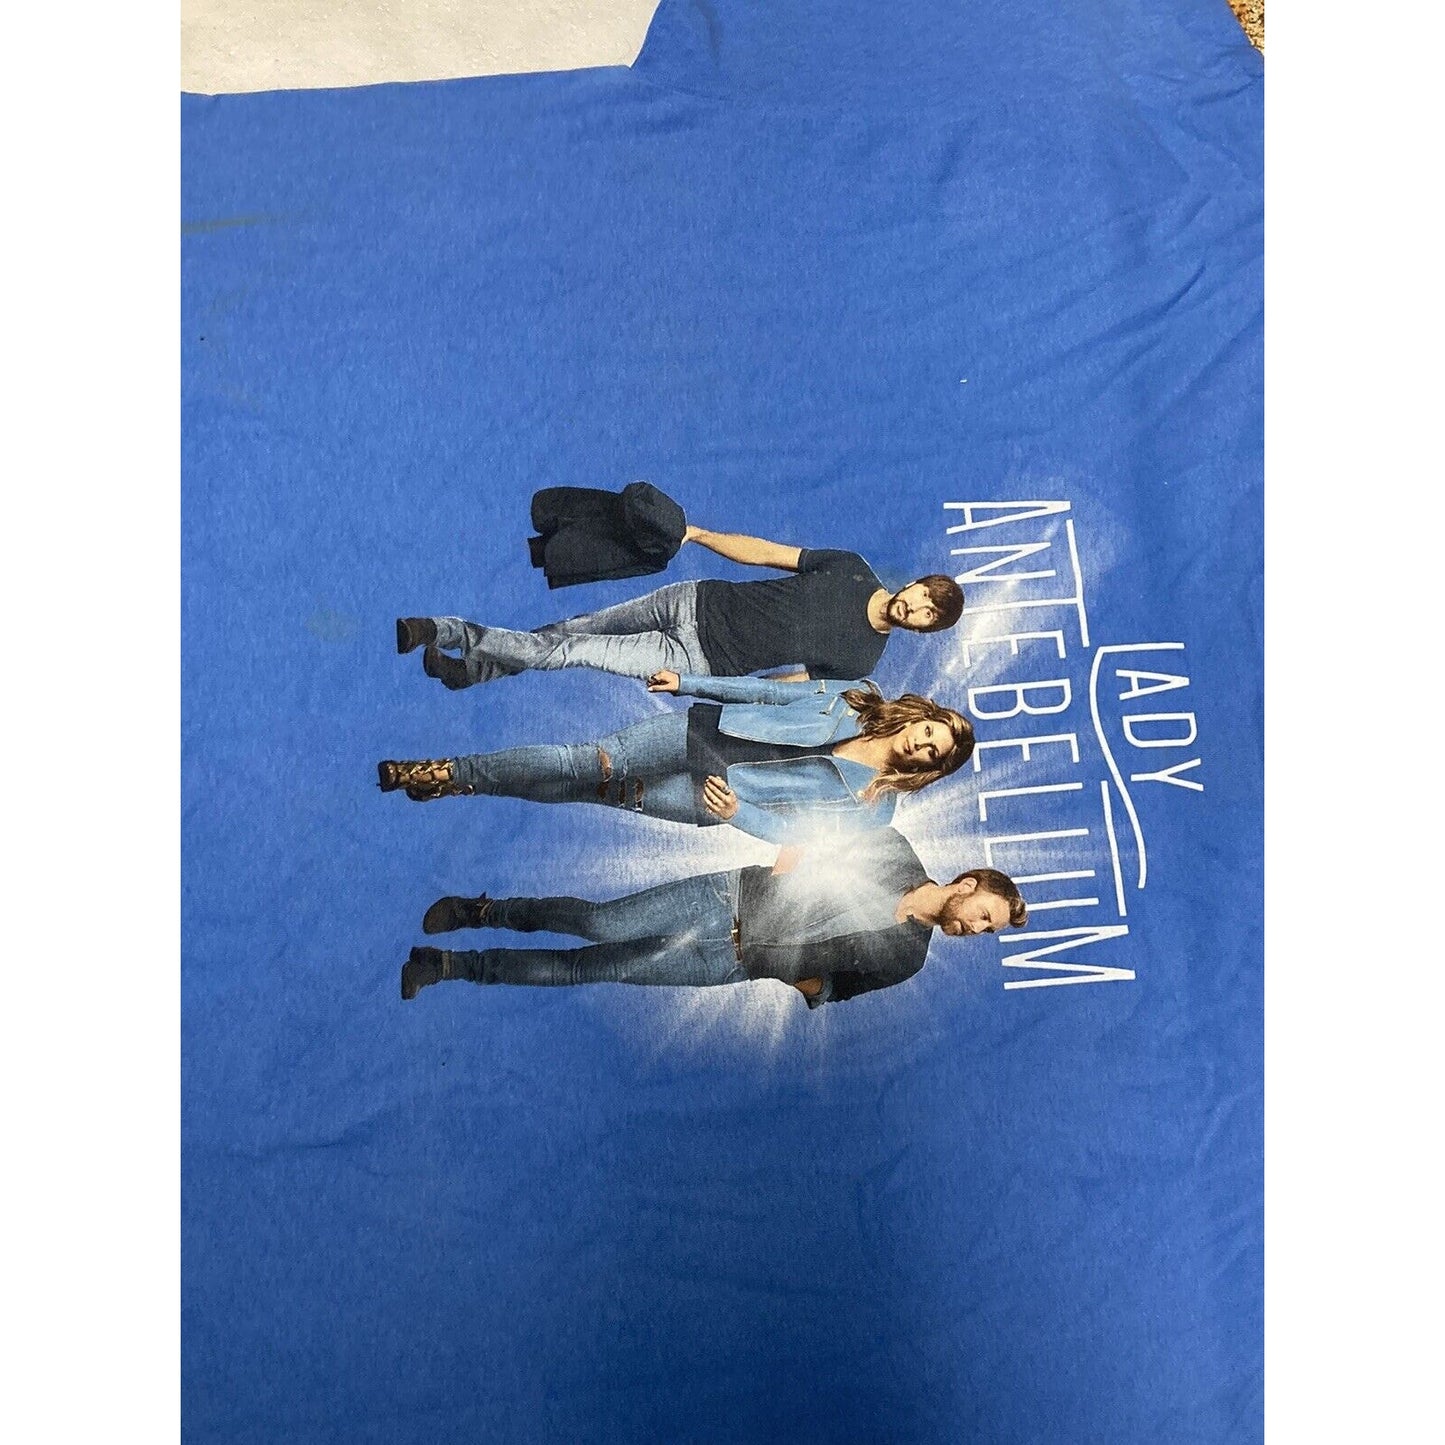 Lady Antebellum Wheels Up 2015 Concert Tour Dates Shirt Blue Has Stains XL